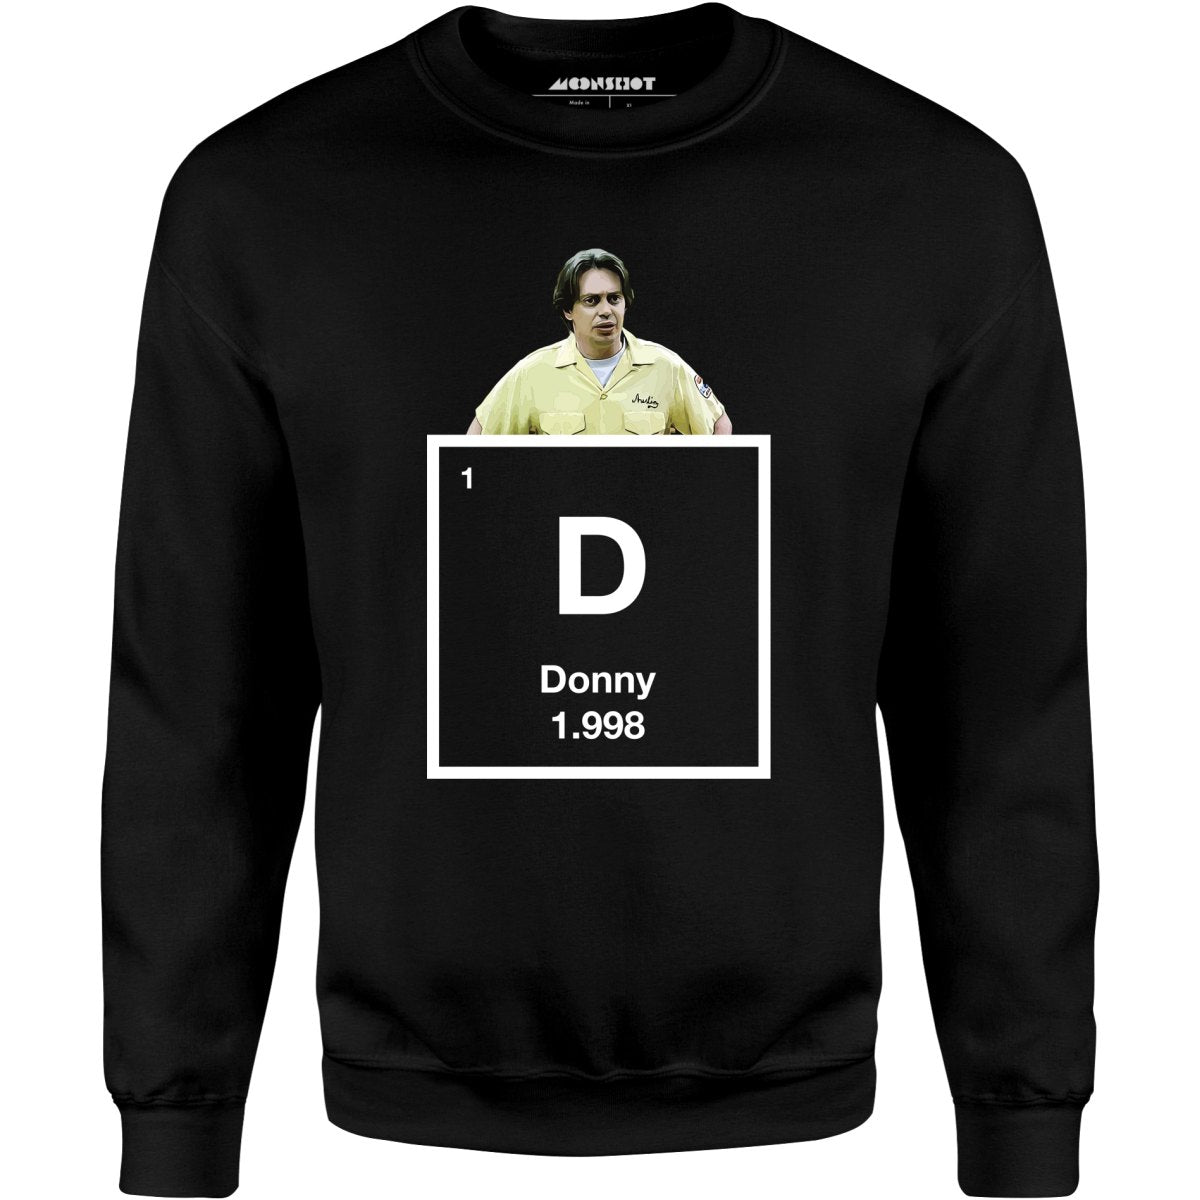 Donny Out of His Element - Big Lebowski - Unisex Sweatshirt